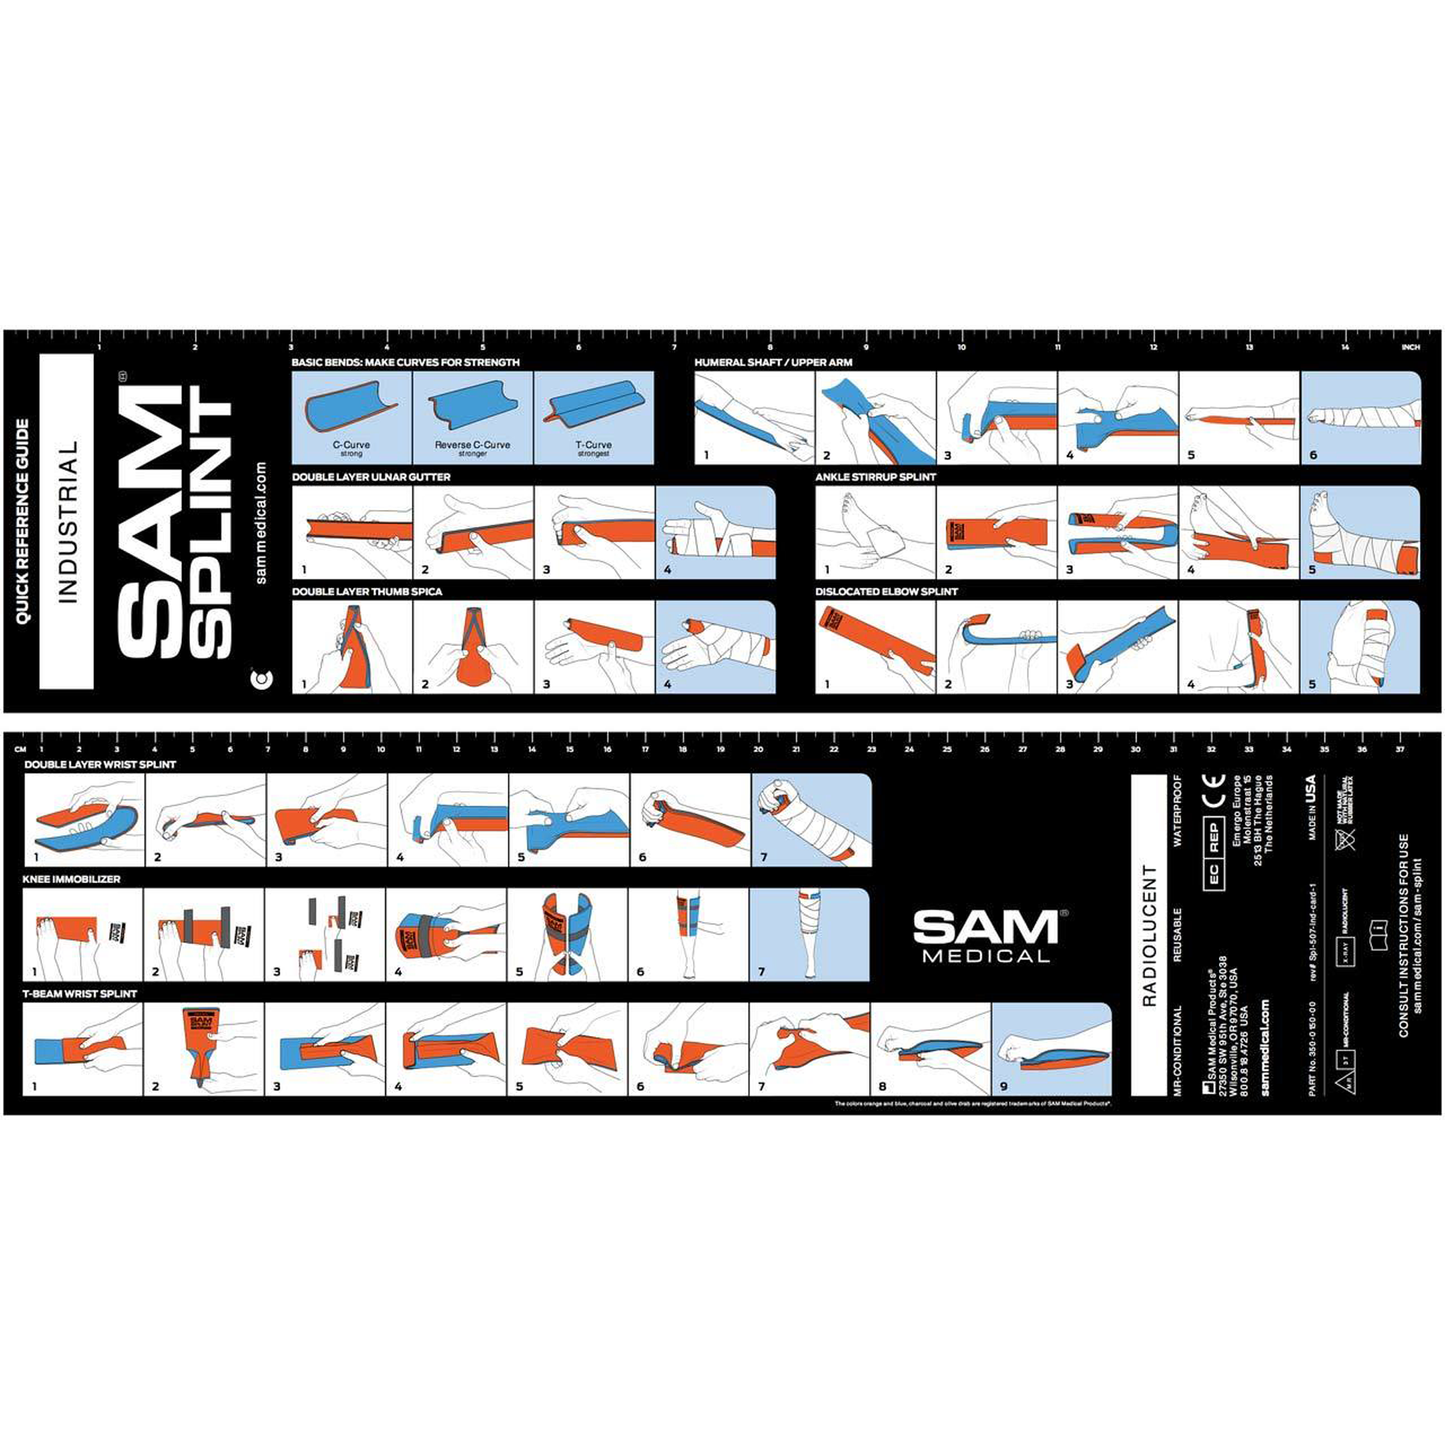 SAM® Splint 36" 91.4cm x 14cm XL - Orange & Blue